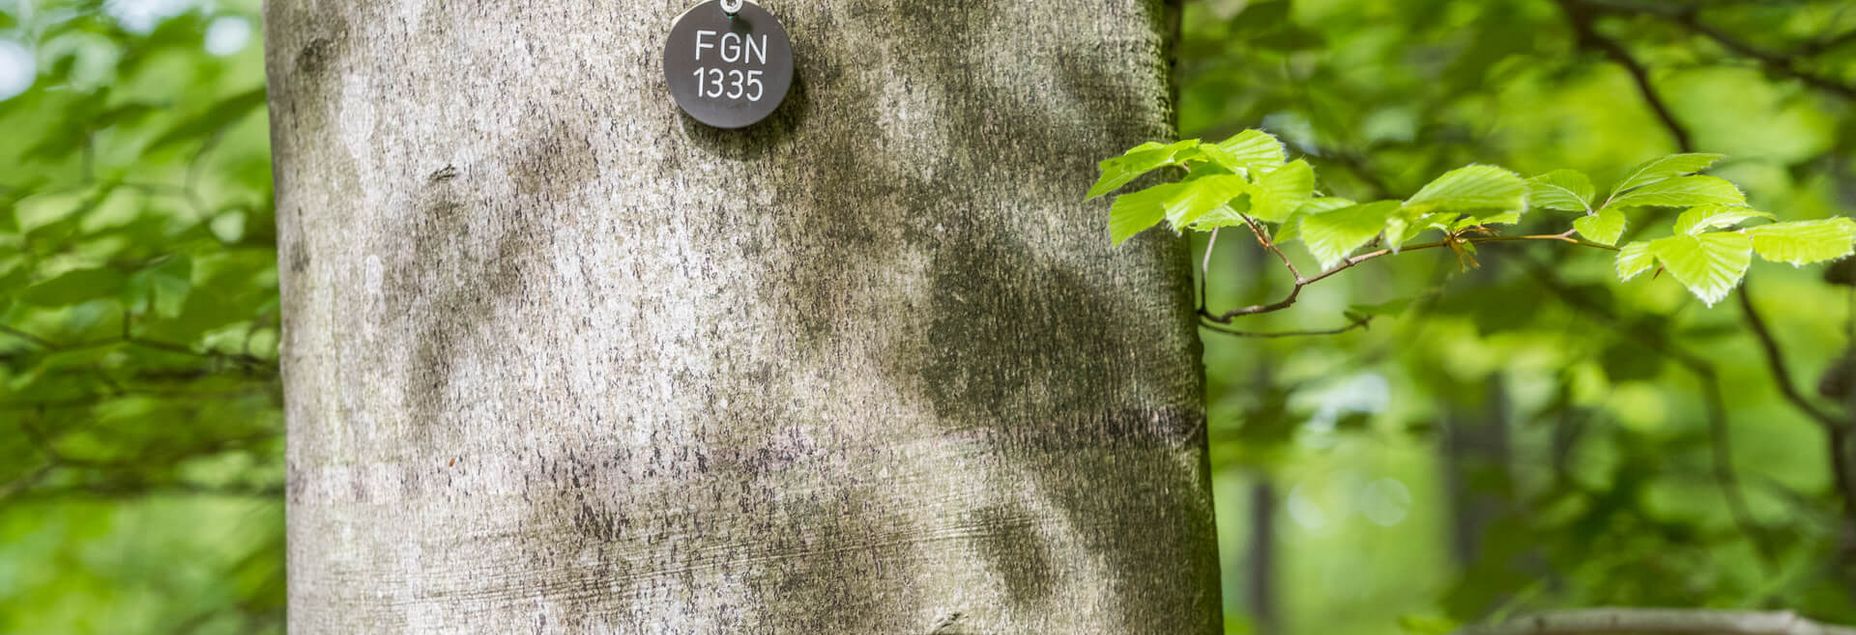 Baum FGN 1335 - Plakette